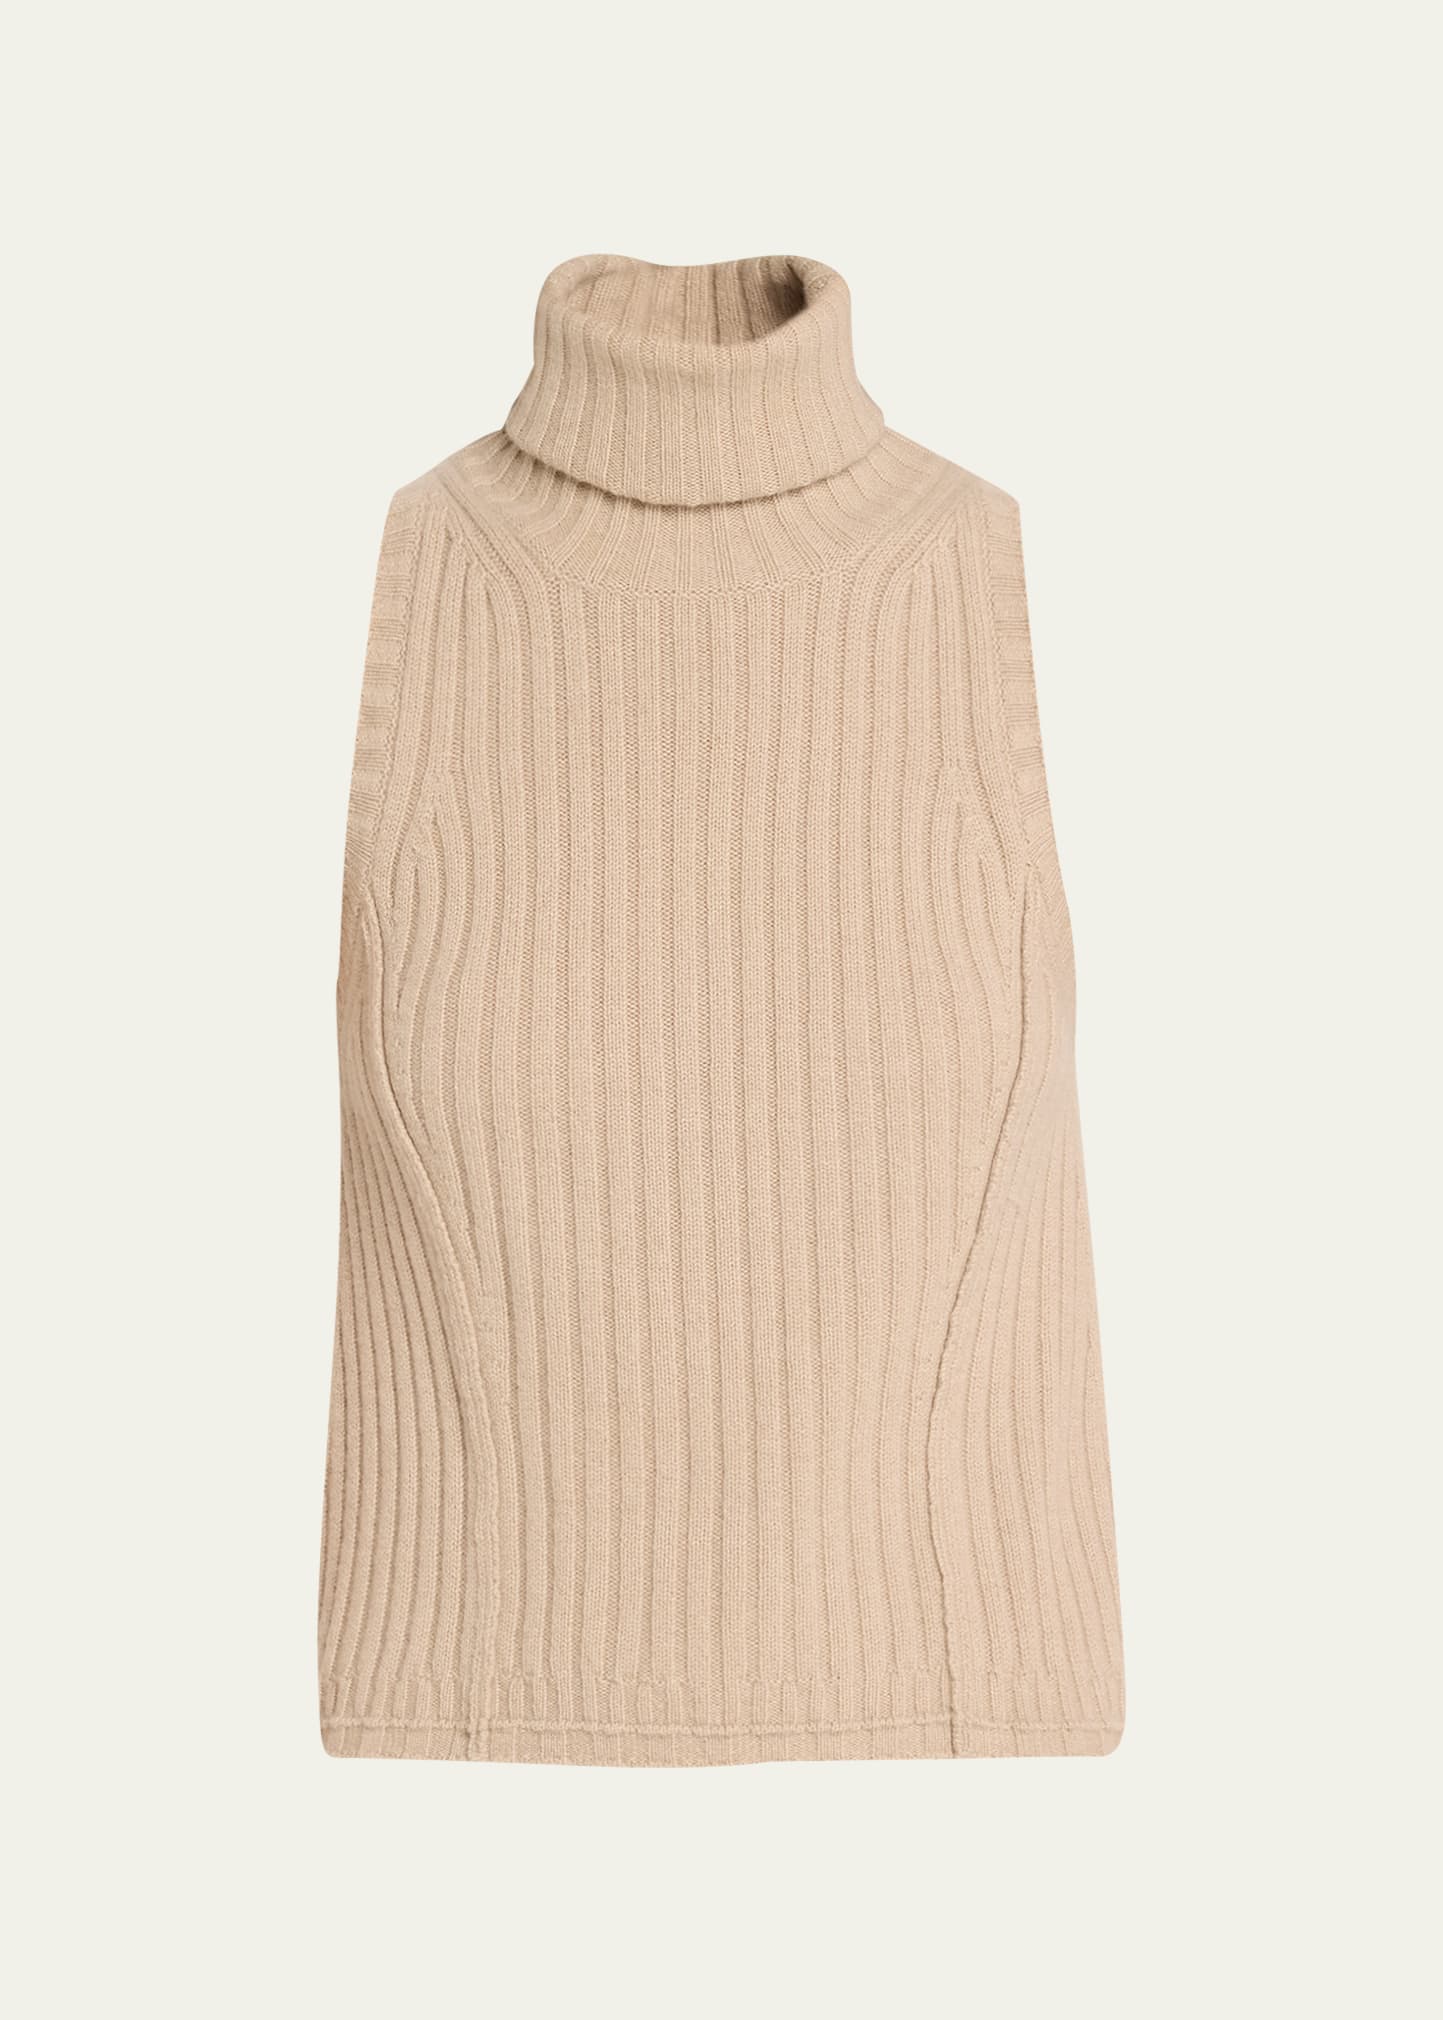 Simkhai Tilda Cashmere And Wool Sleeveless High-neck Top In Light Driftwood